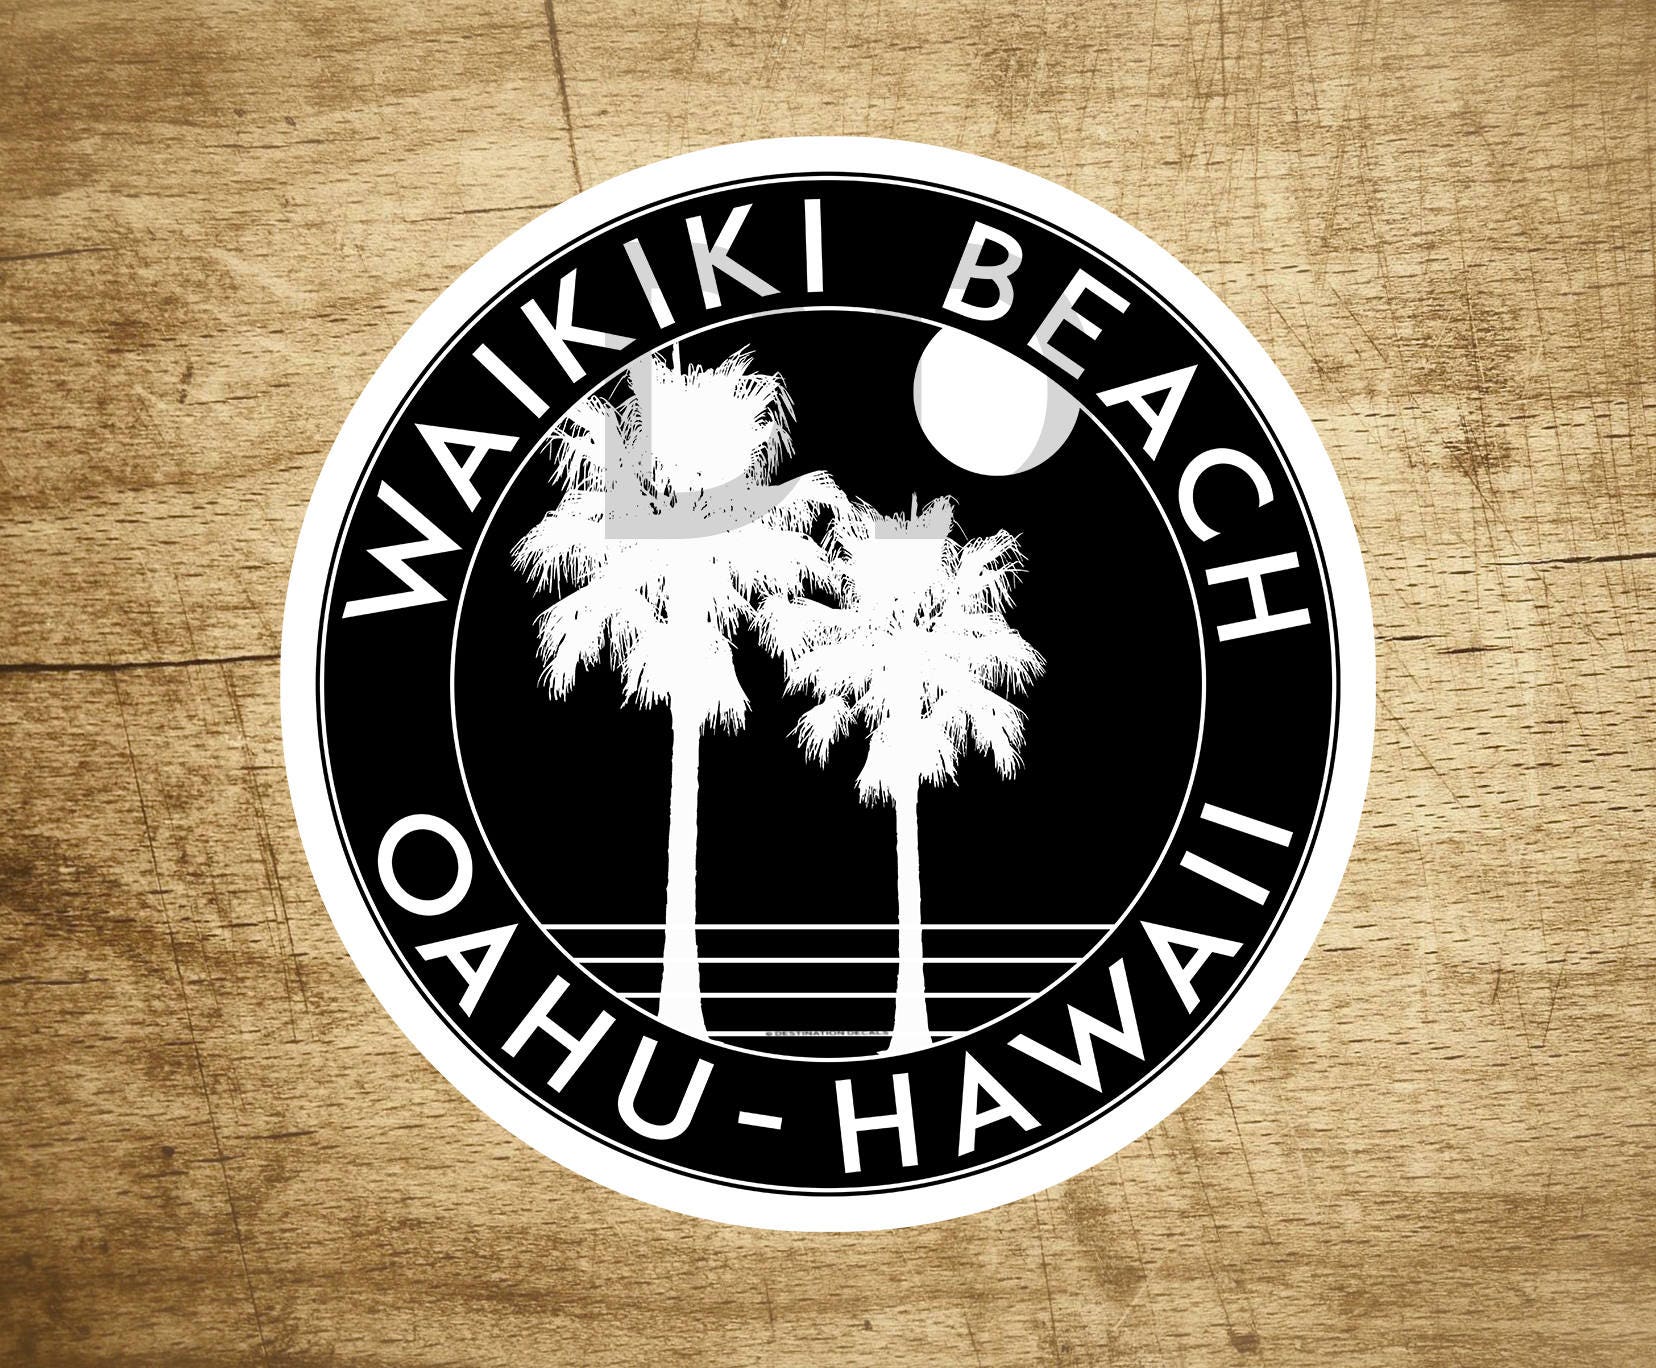 Waikiki Beach Hawaii Sticker Decal Beach Ocean Surfing Vinyl 3" Surfer Oahu